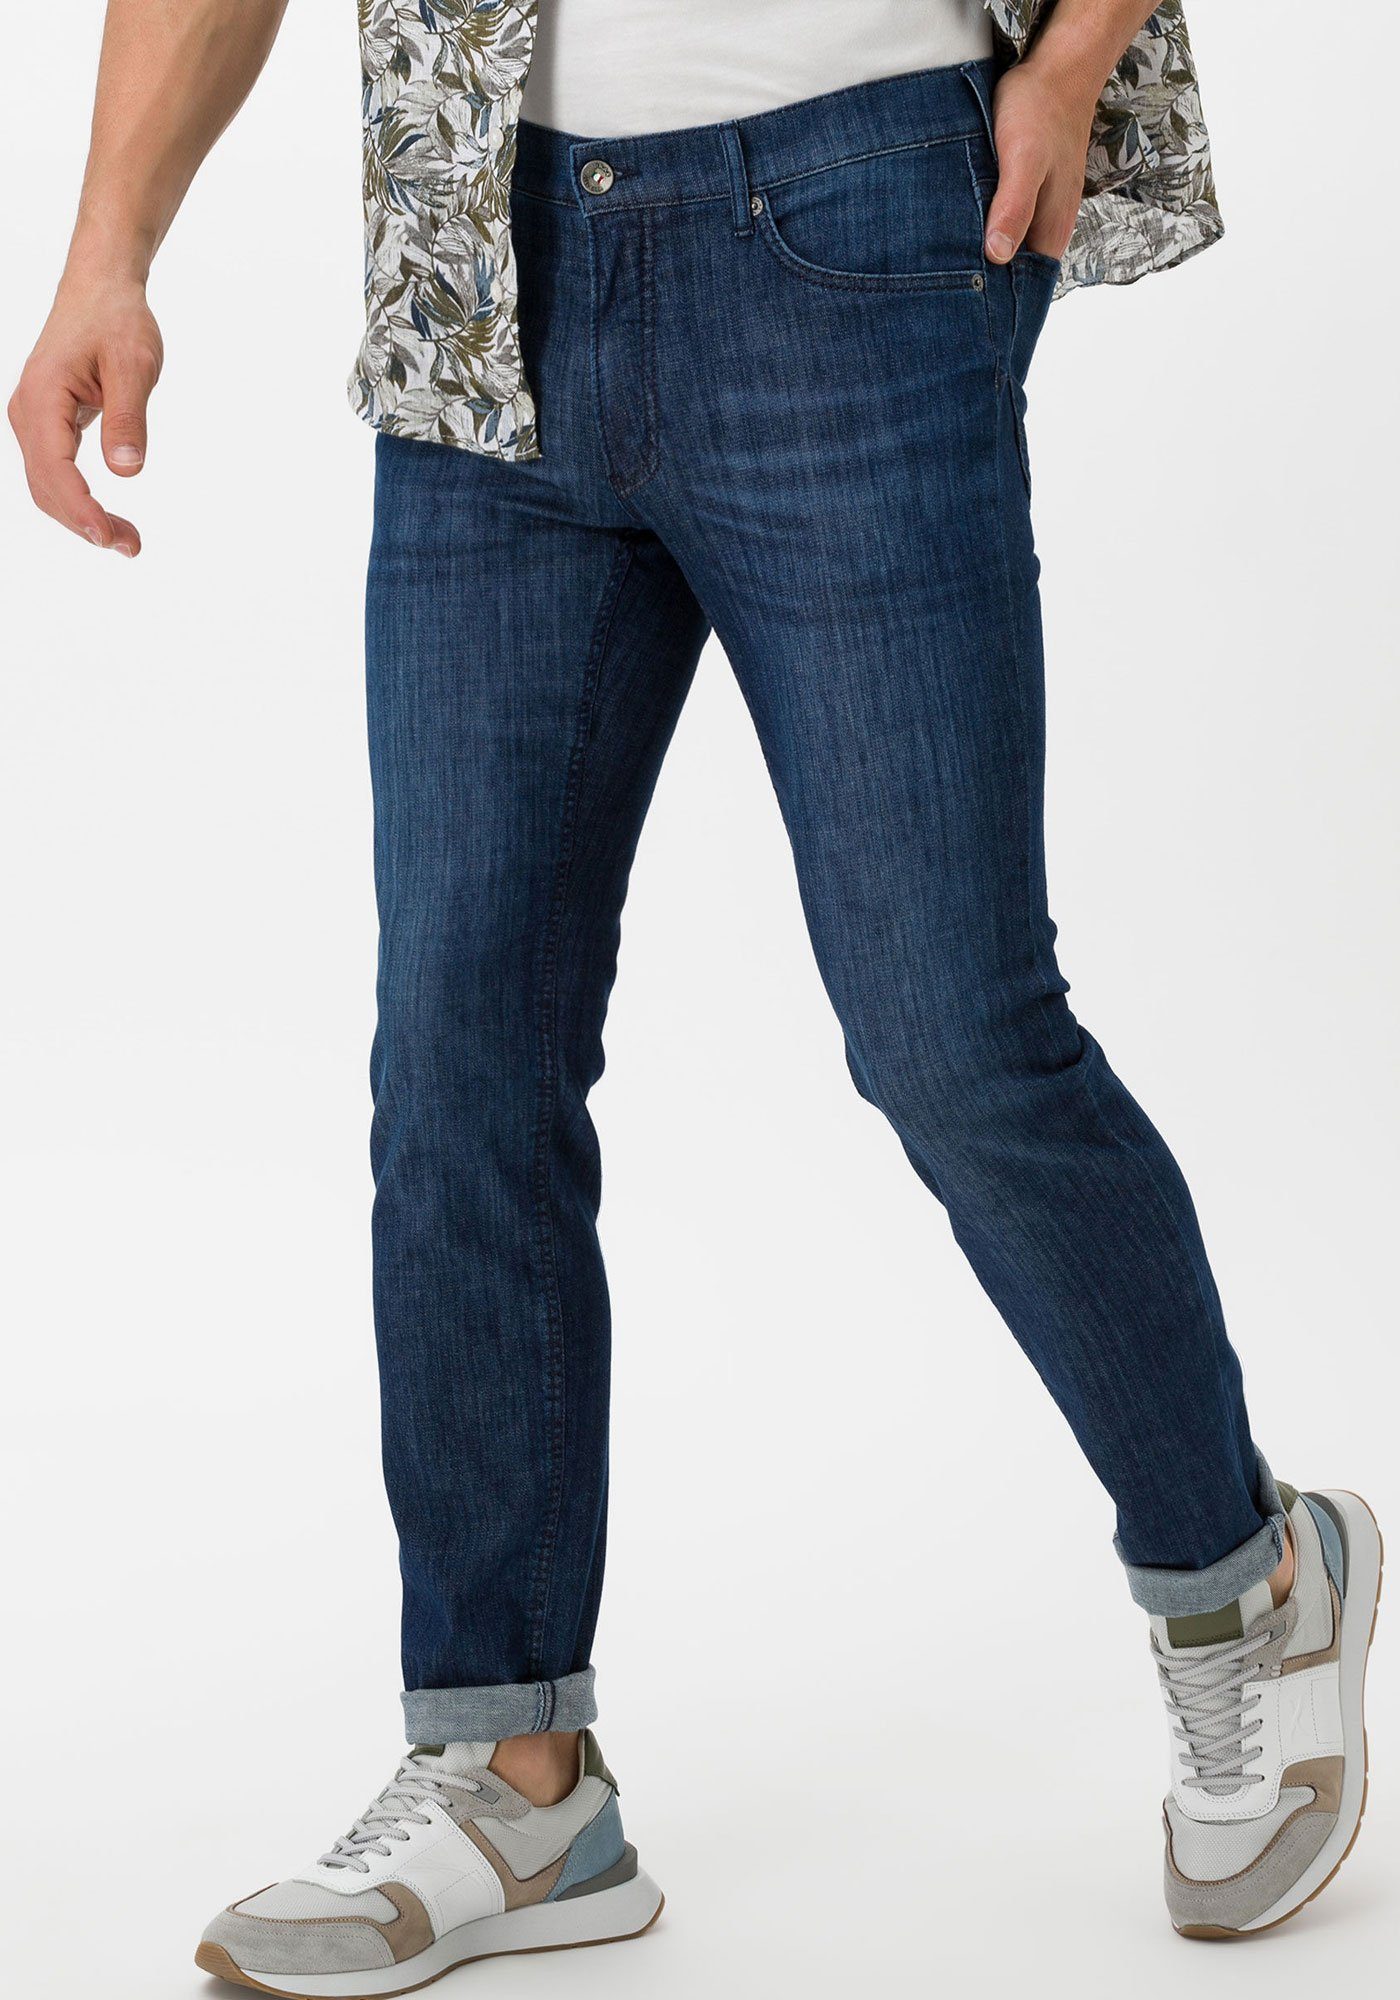 Style CHUCK 5-Pocket-Jeans blue softer Hi-Flex navy used LIGHT, Brax Sommerdenim